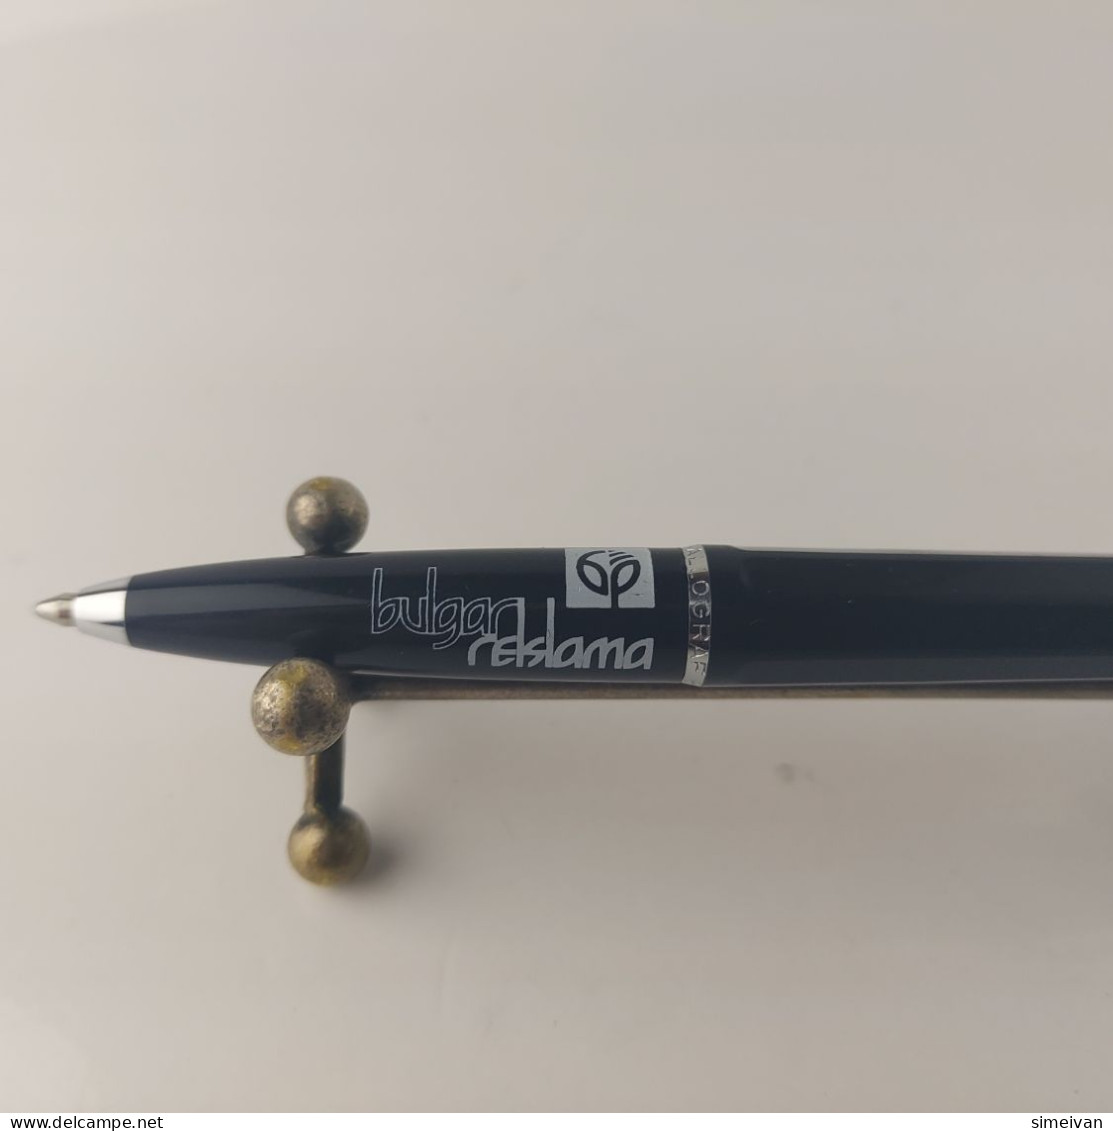 Vintage Ballograf Epoca Ballpoint Pen Black Chrome Trim Made In Sweden #5525 - Schrijfgerief